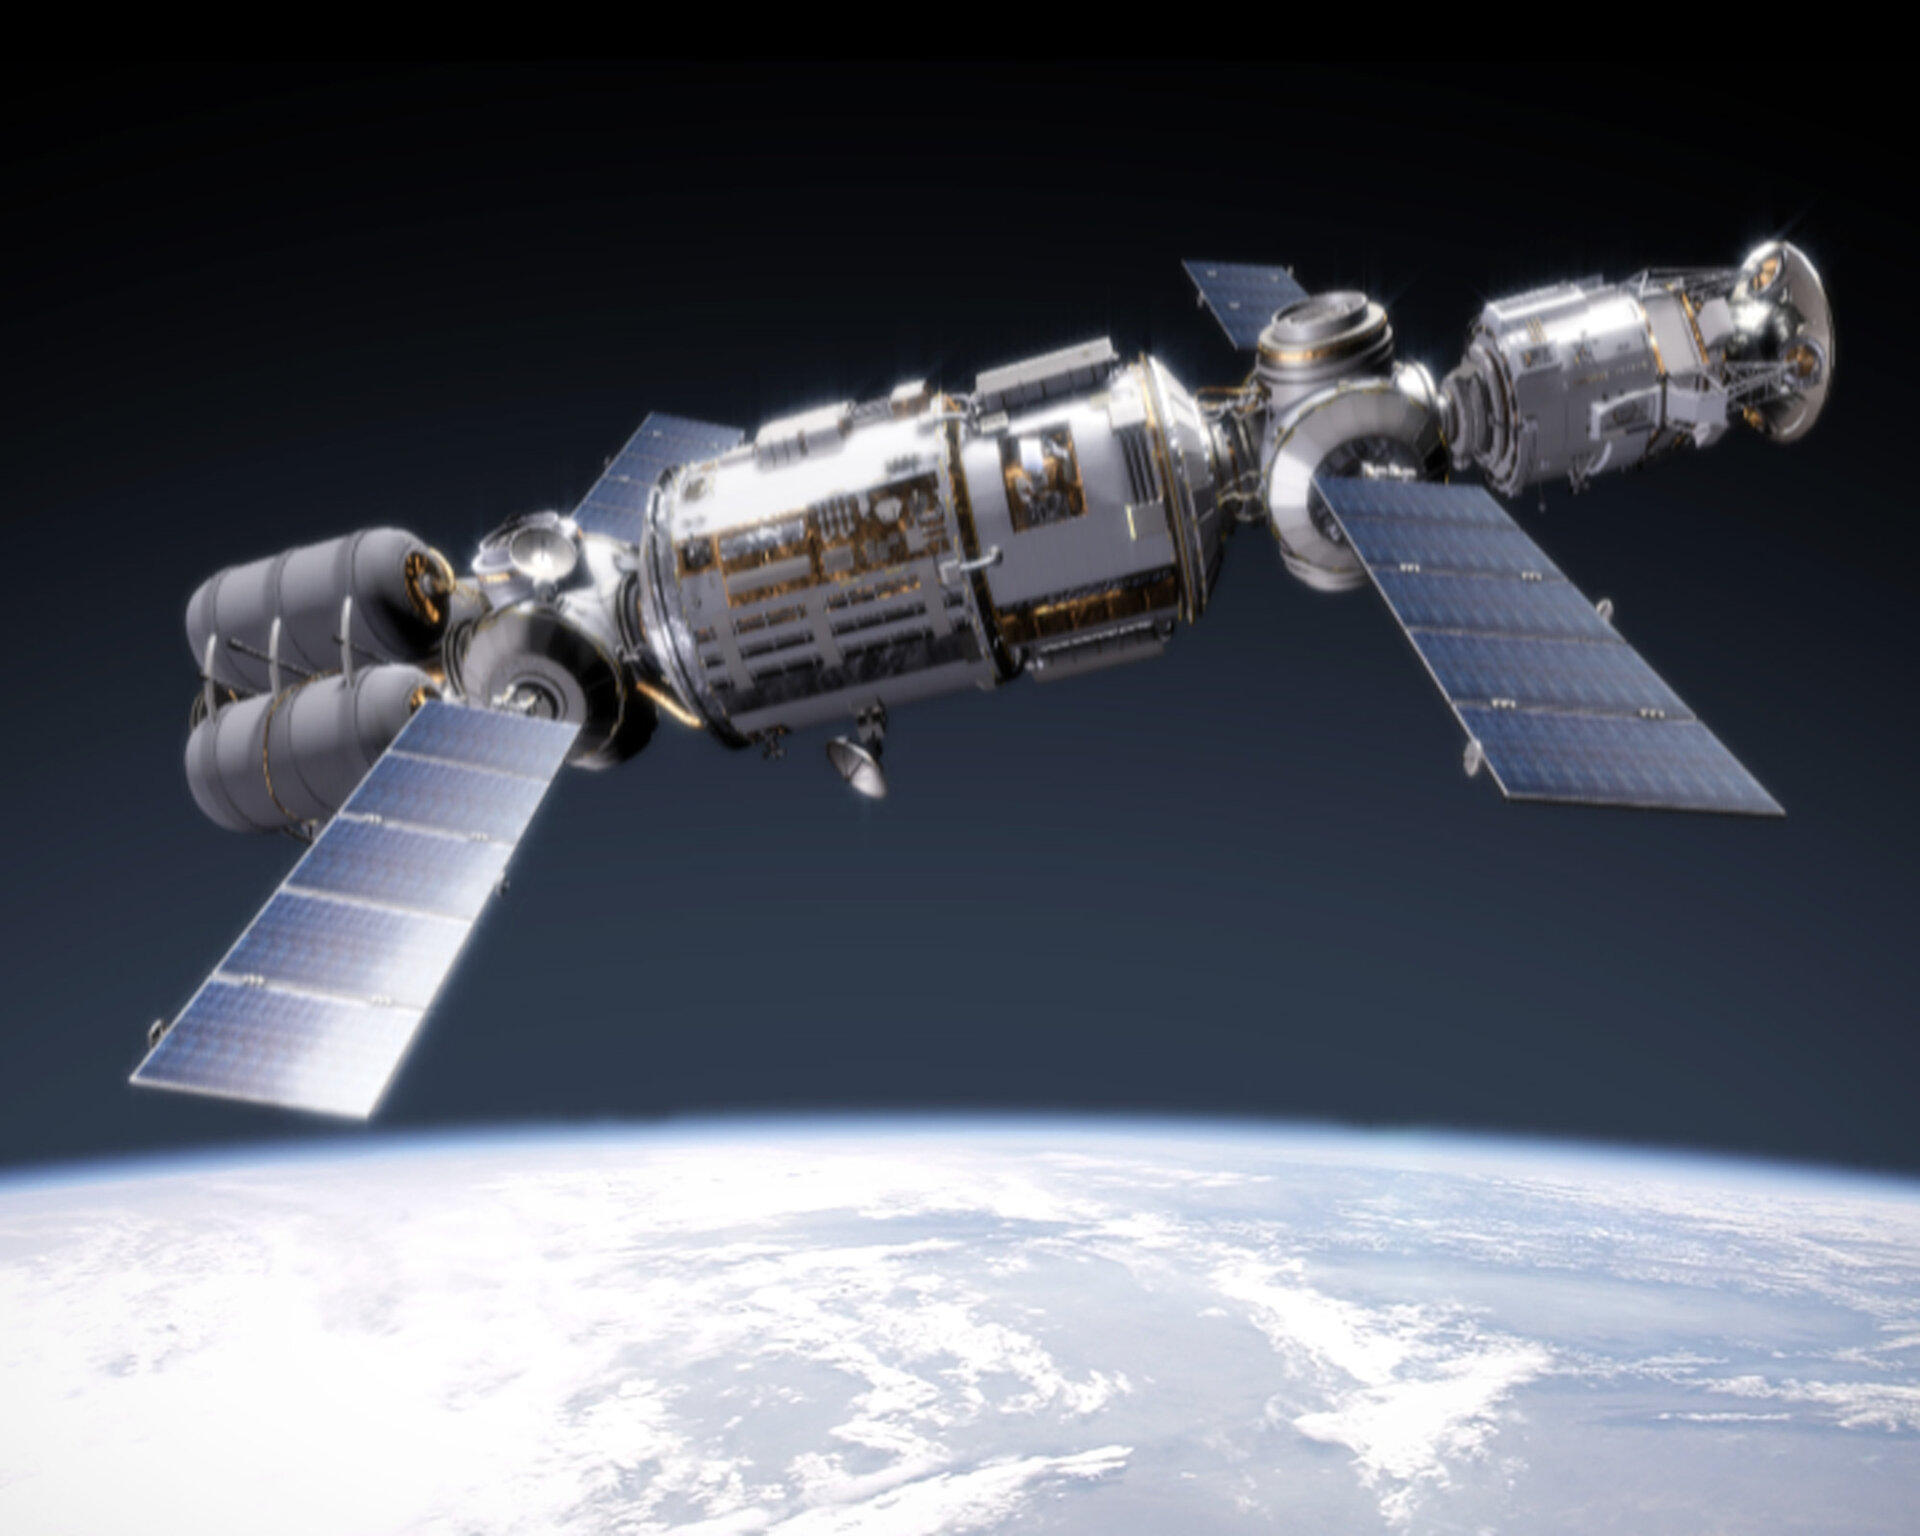 Exploration mission spacecraft assembled in orbit